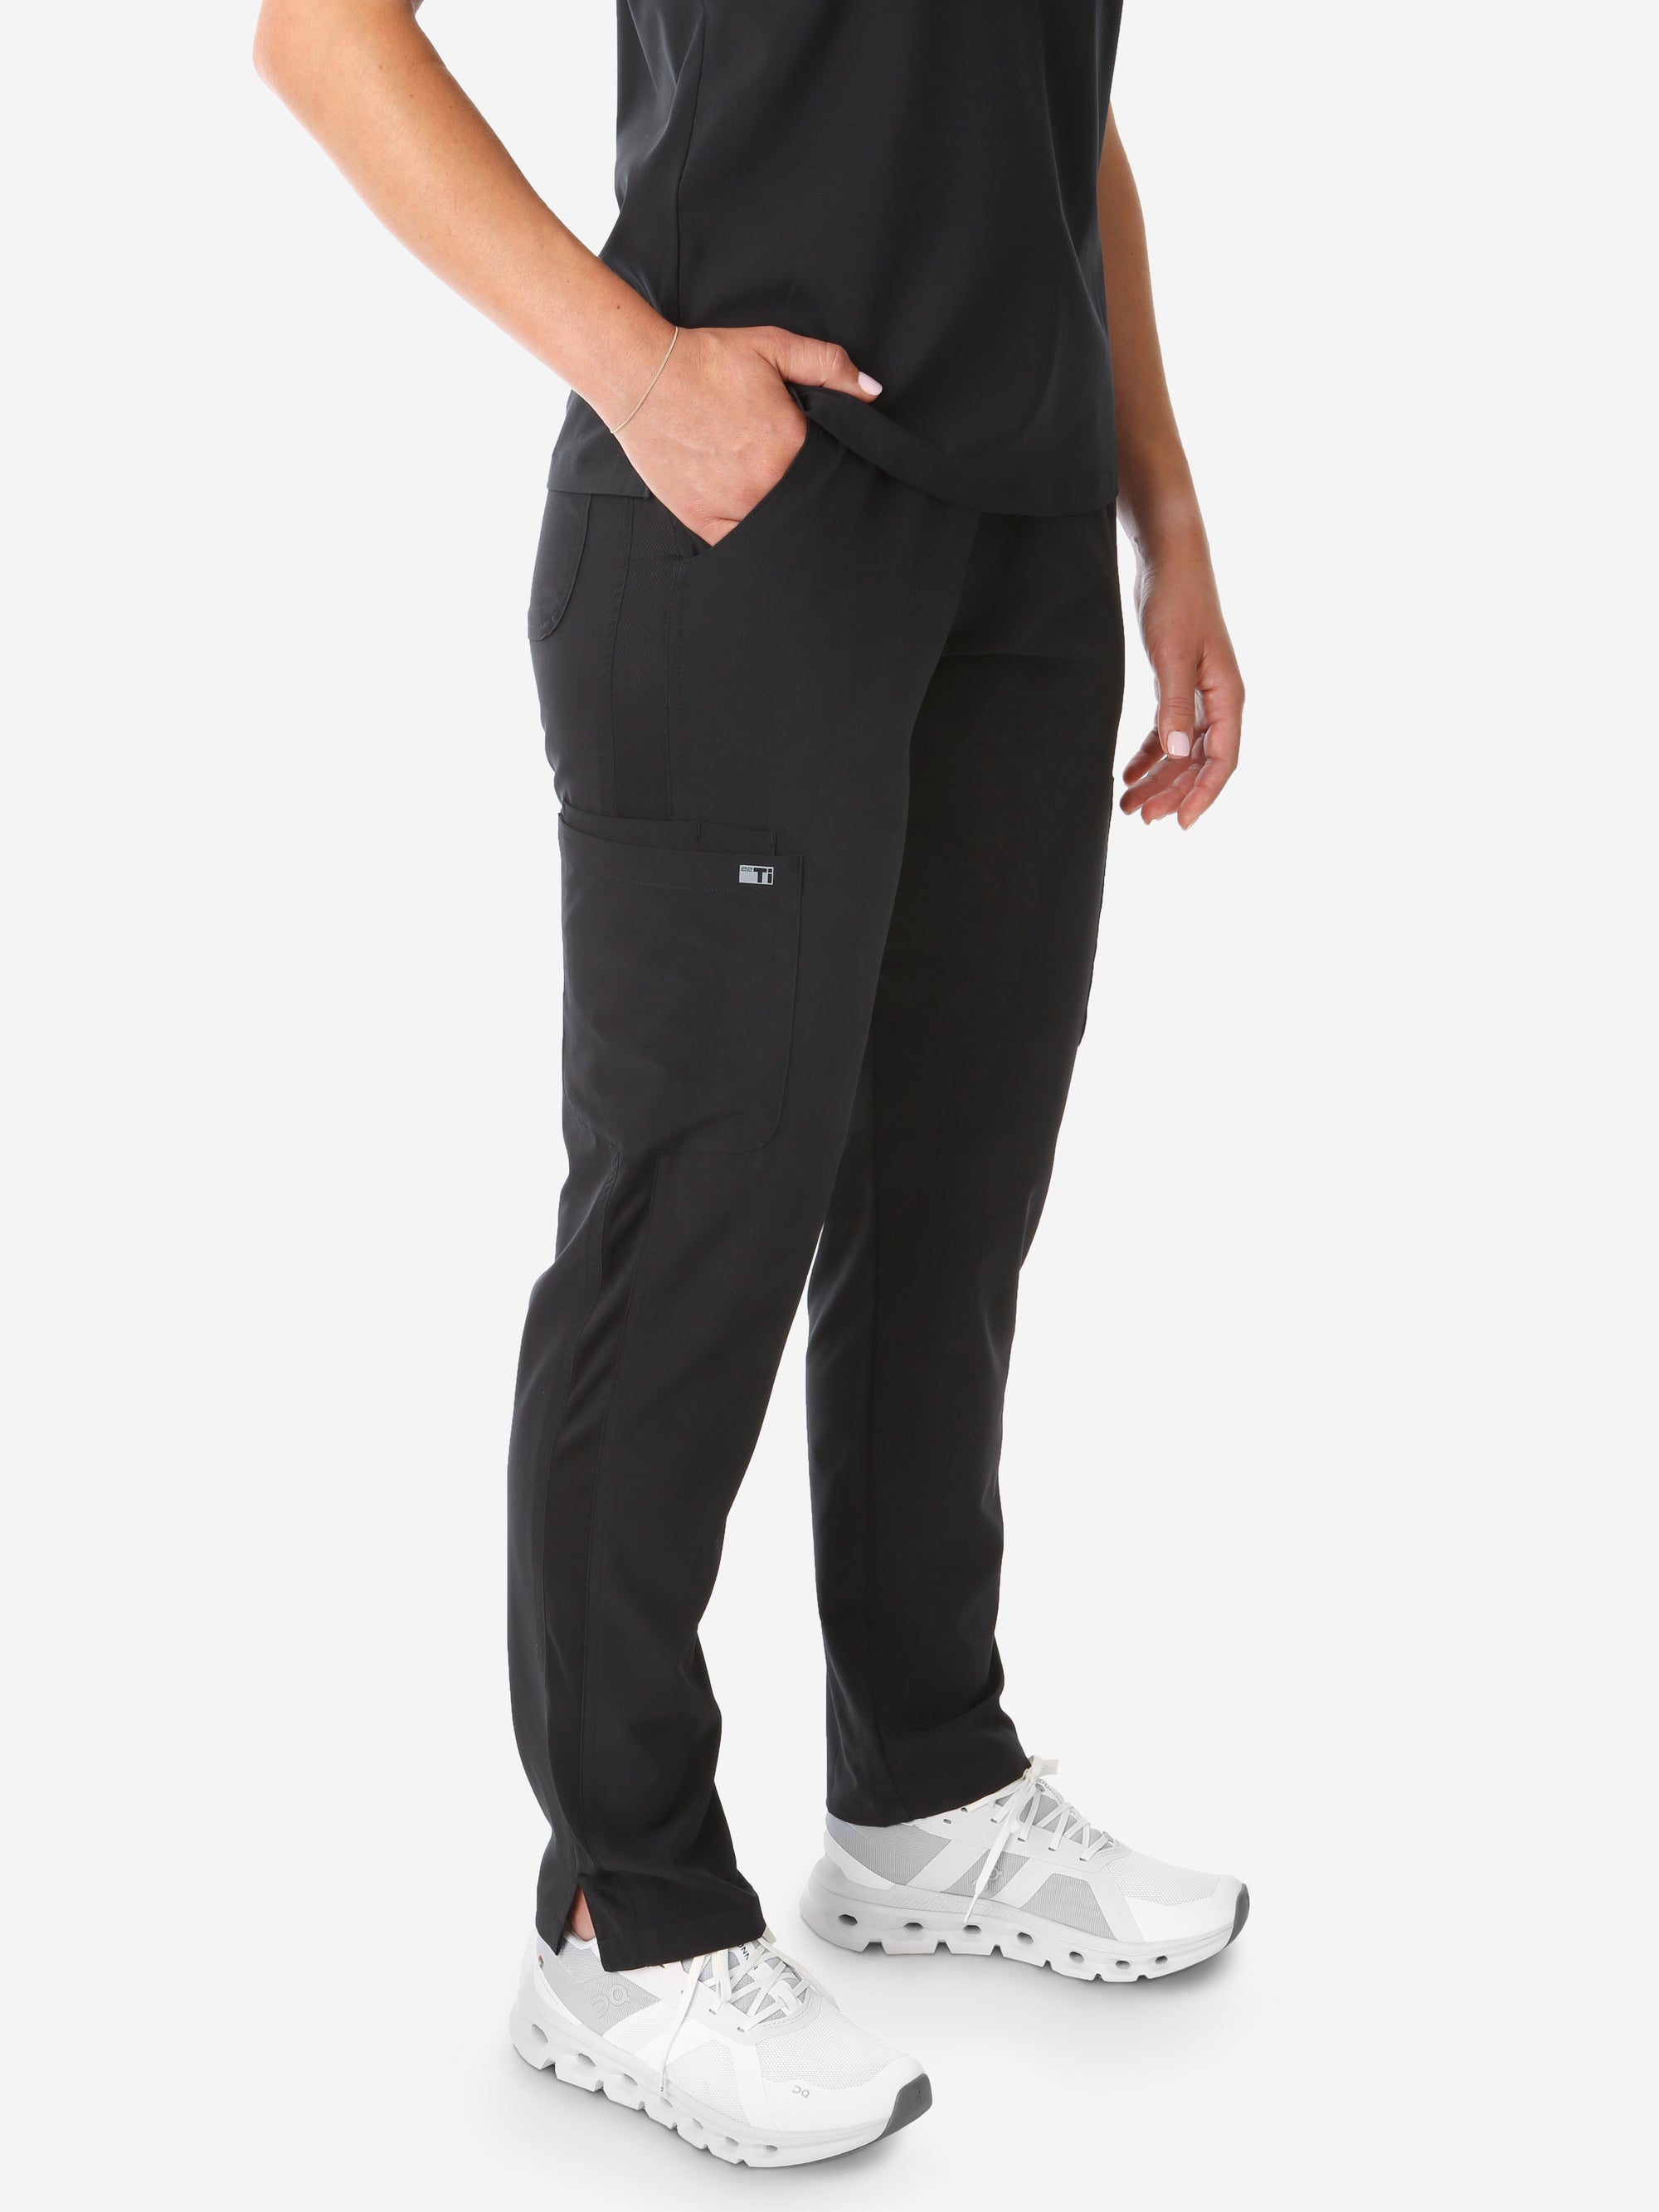 TiScrubs Real Black Women&#39;s Stretch 9-Pocket Pants Side View Pants Only